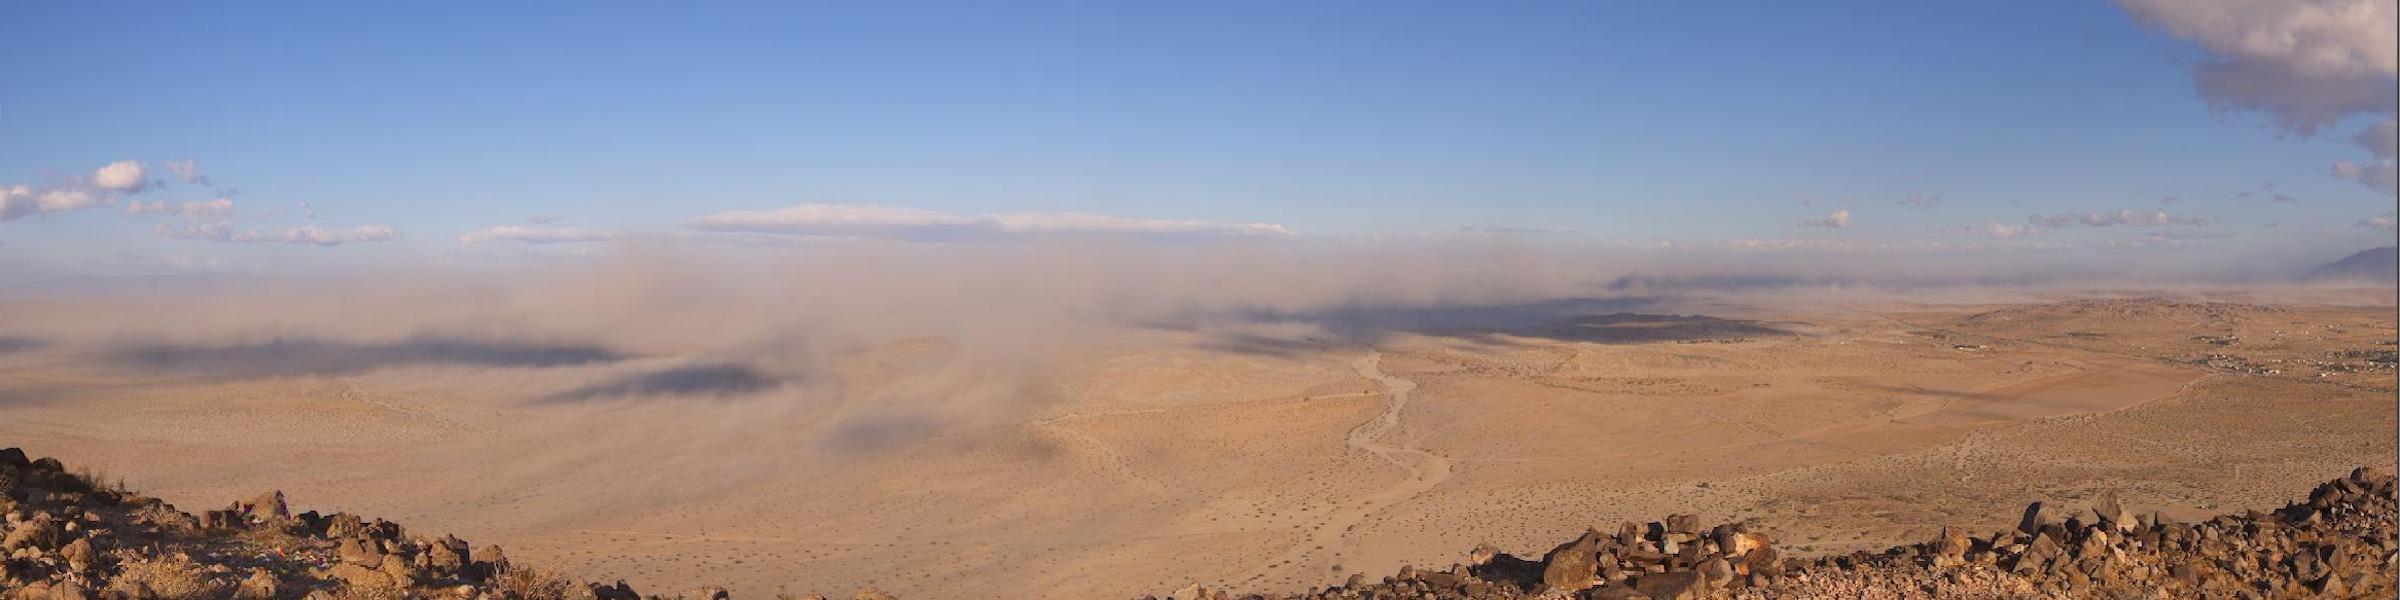 Dust storm in the Anza Desert